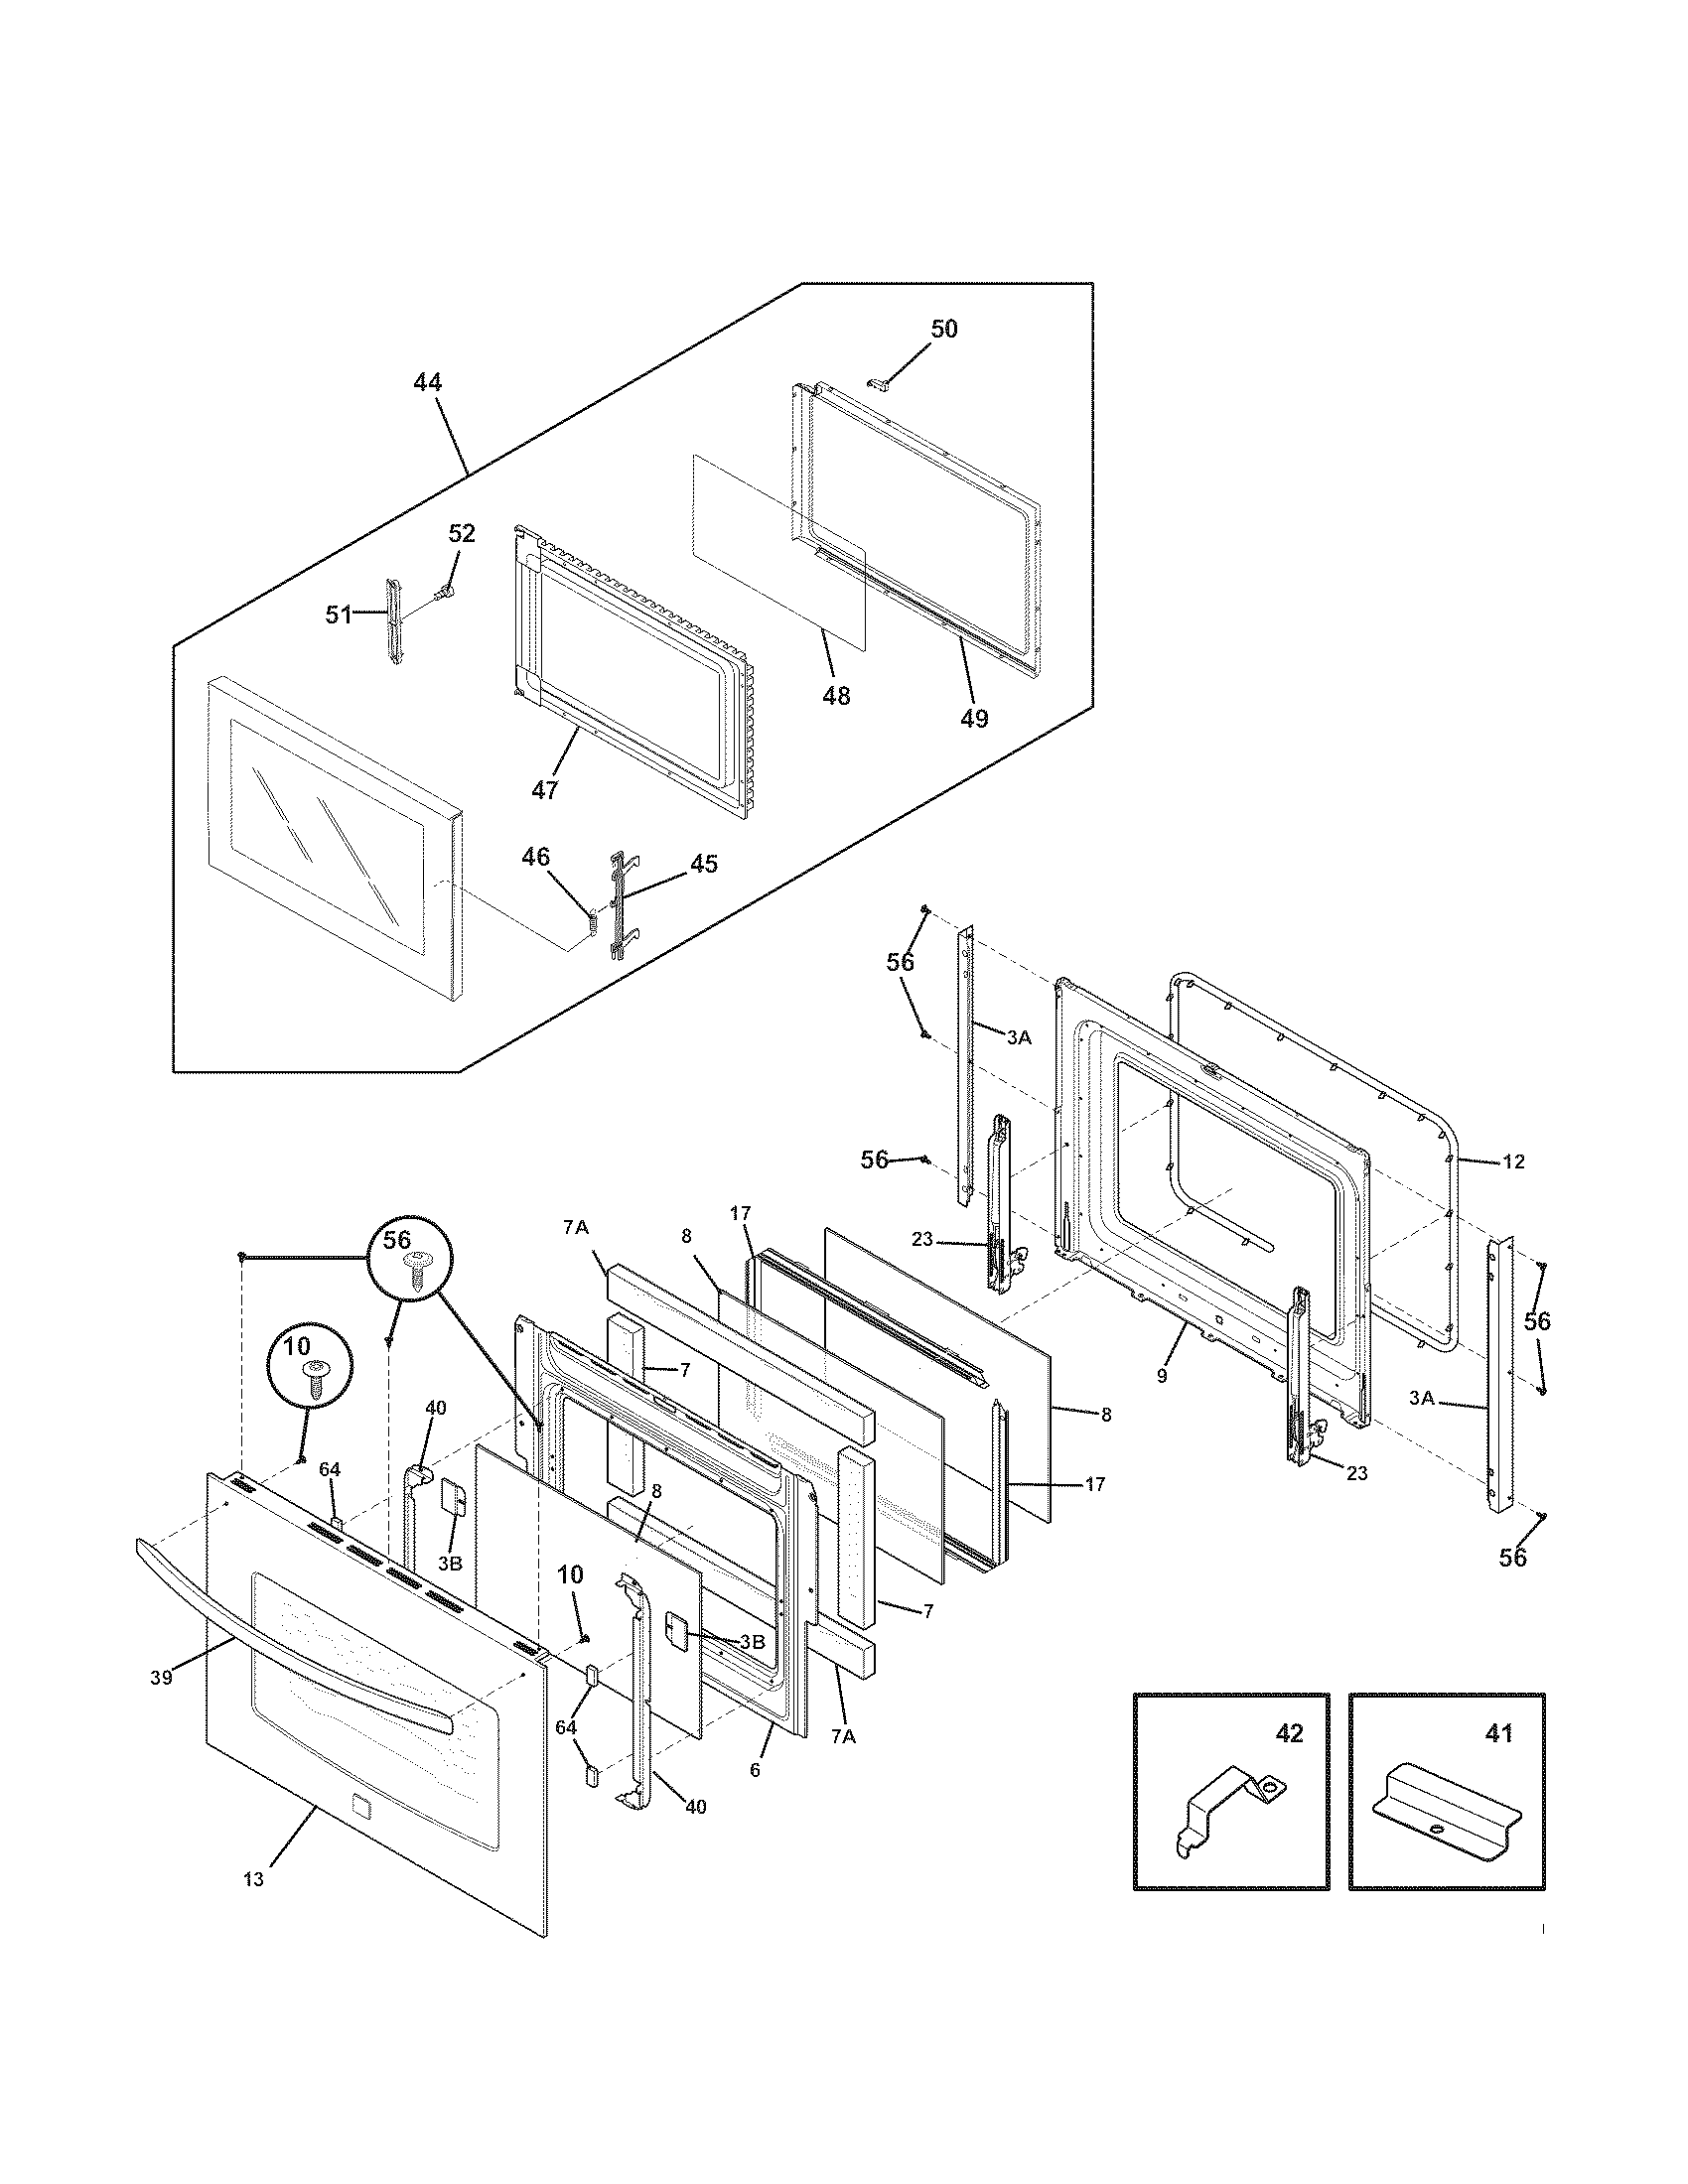 legrand dimmer switch wiring diagram